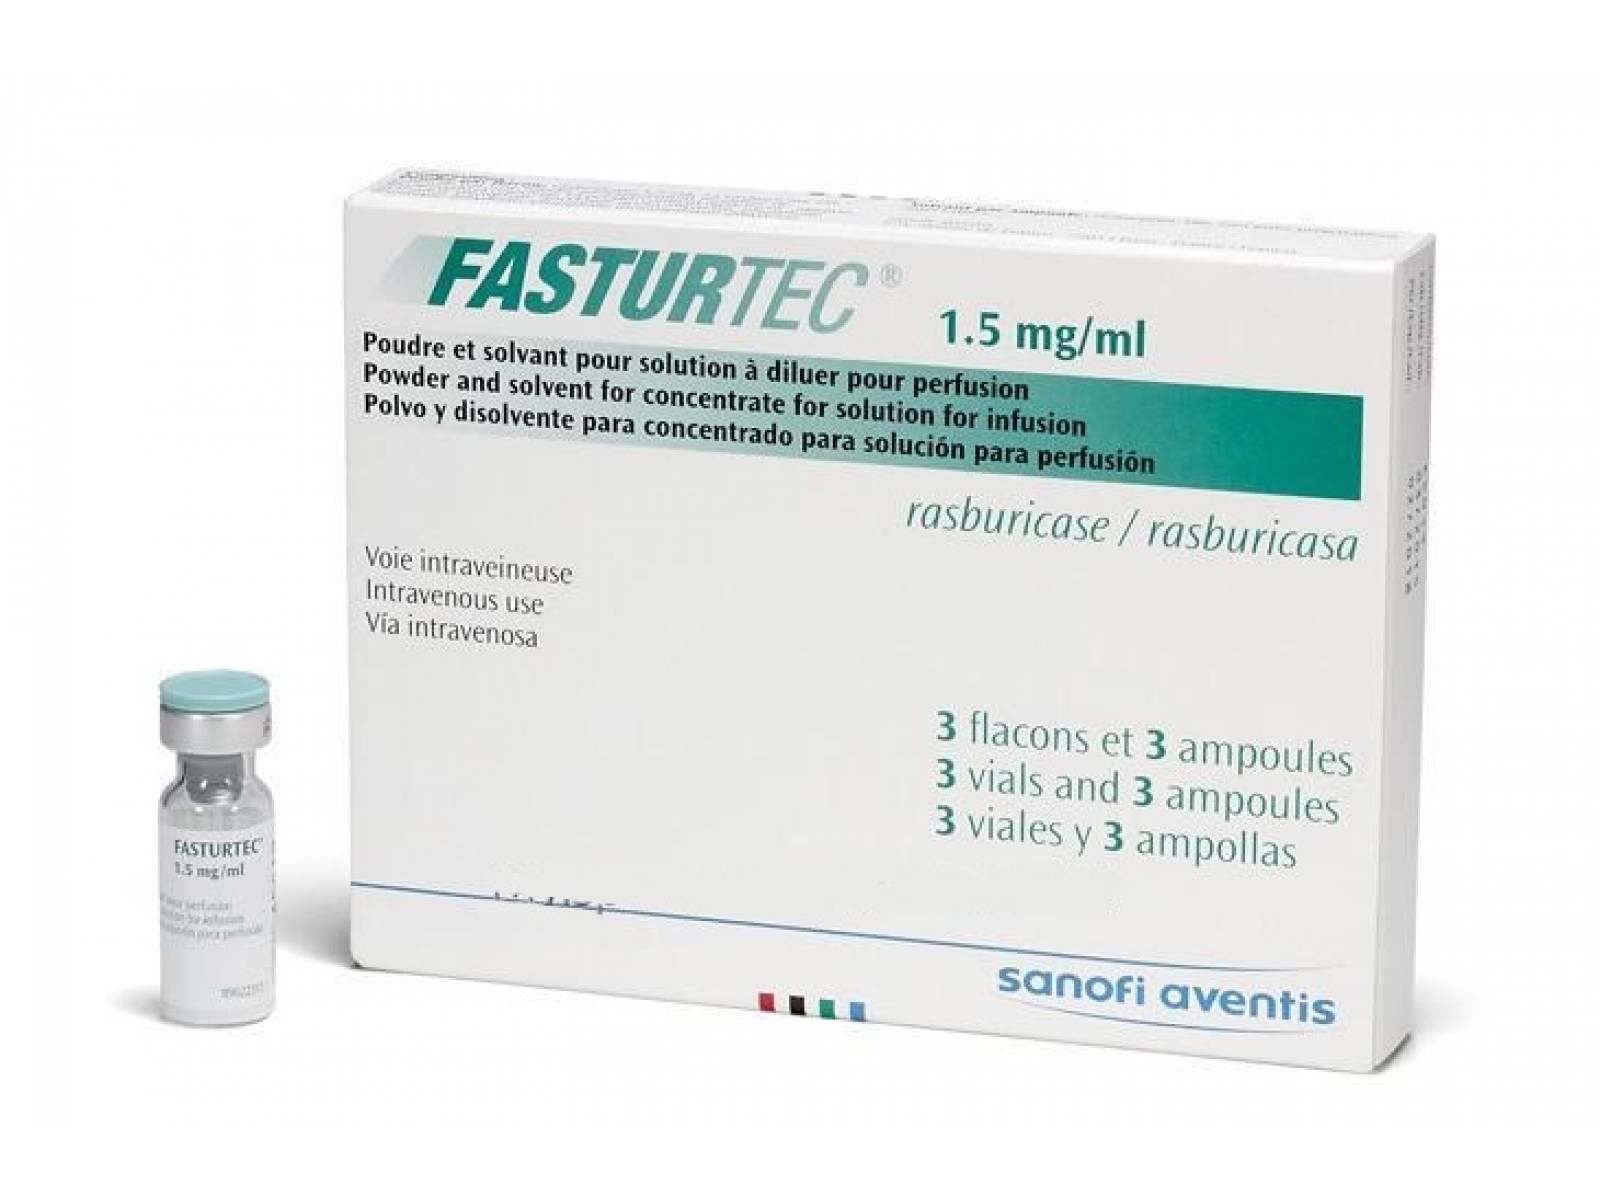 Fasturtec(rasburicase 拉布立酶粉末+溶液剂/套)中文说明书_香港济民药业